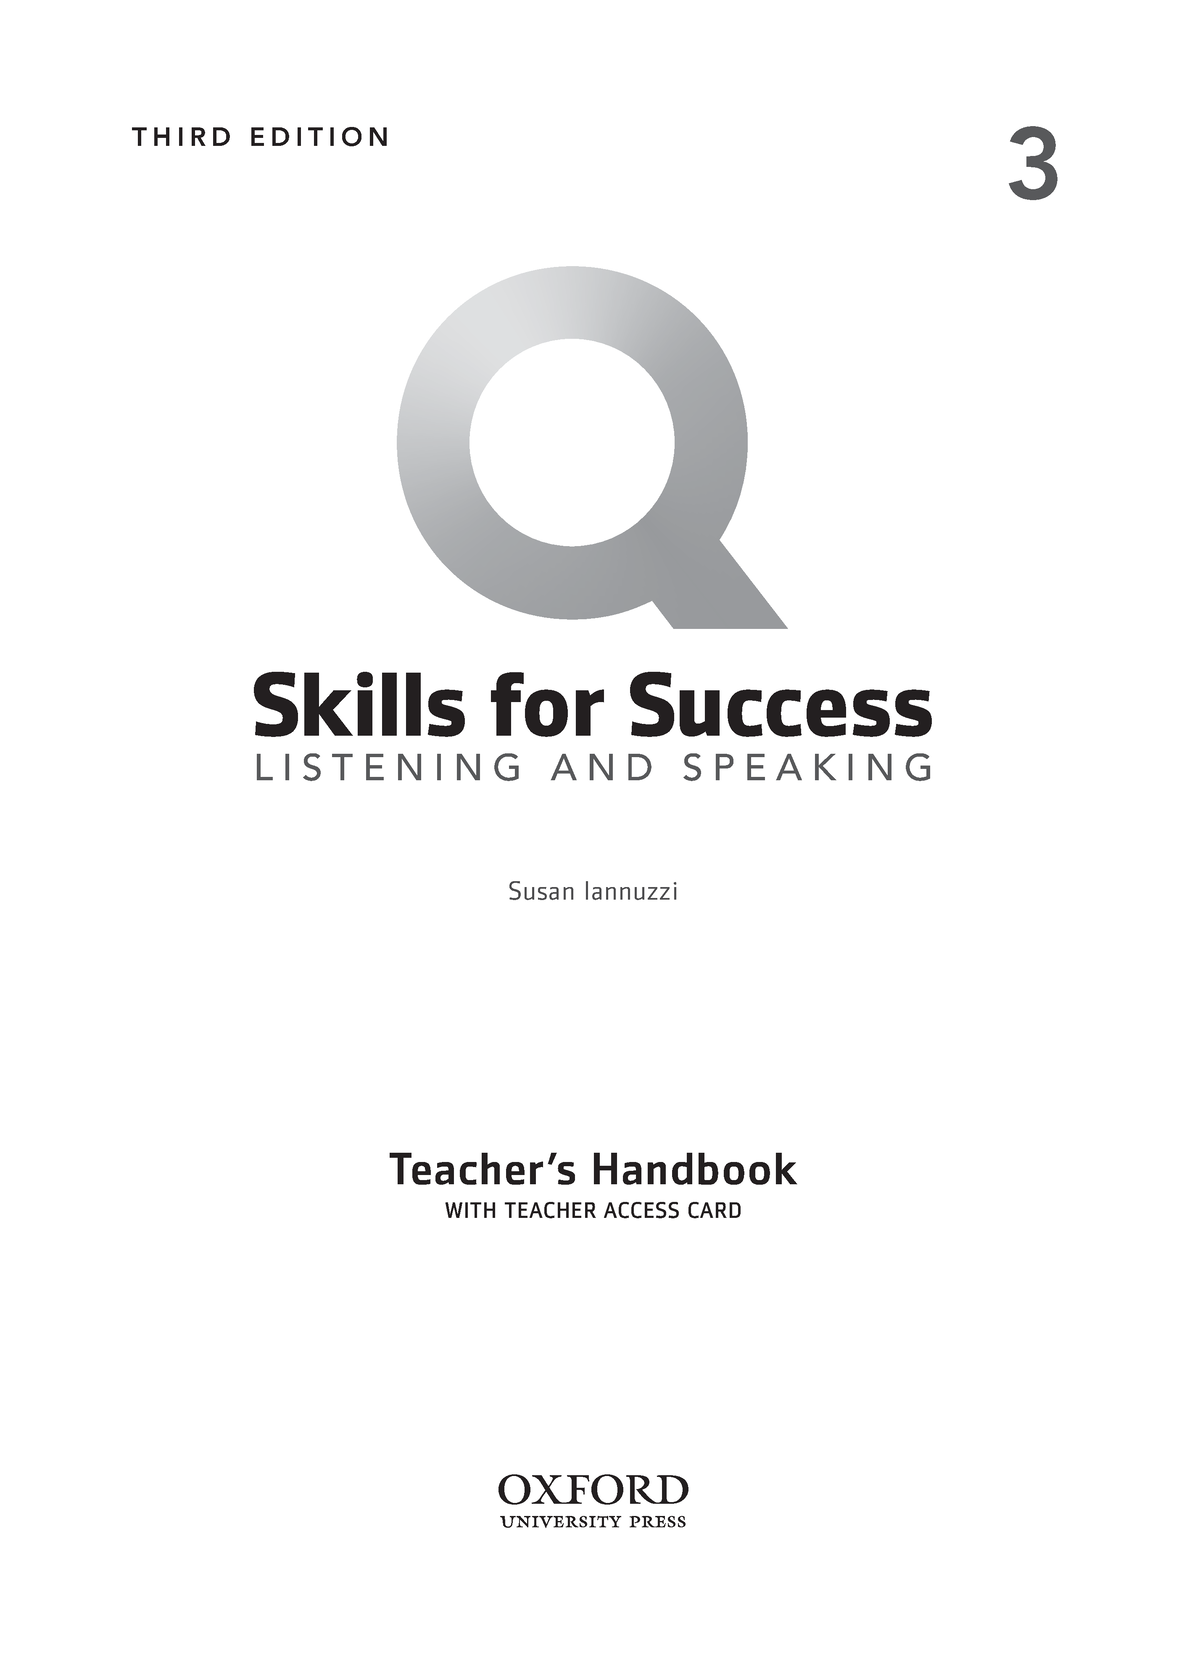 Oxford - Q Skills for Success Listening and Speaking 3 Teacher’s Handbook 3rd Edition - T H I R D E - Studocu